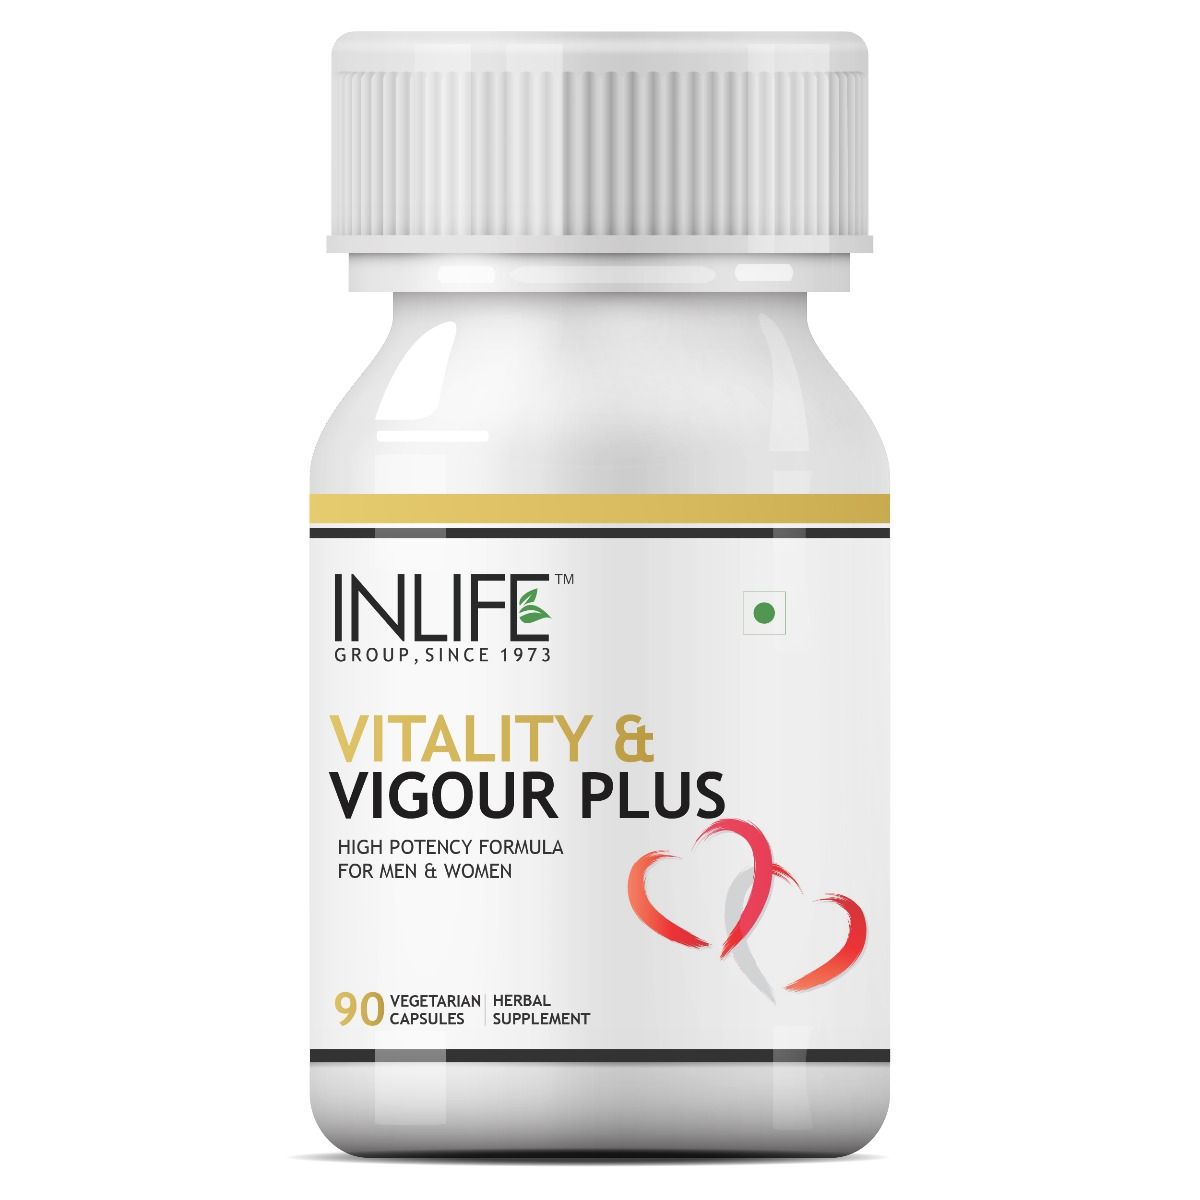 Inlife Vitality & Vigour Plus, 90 Capsules, Pack of 1 